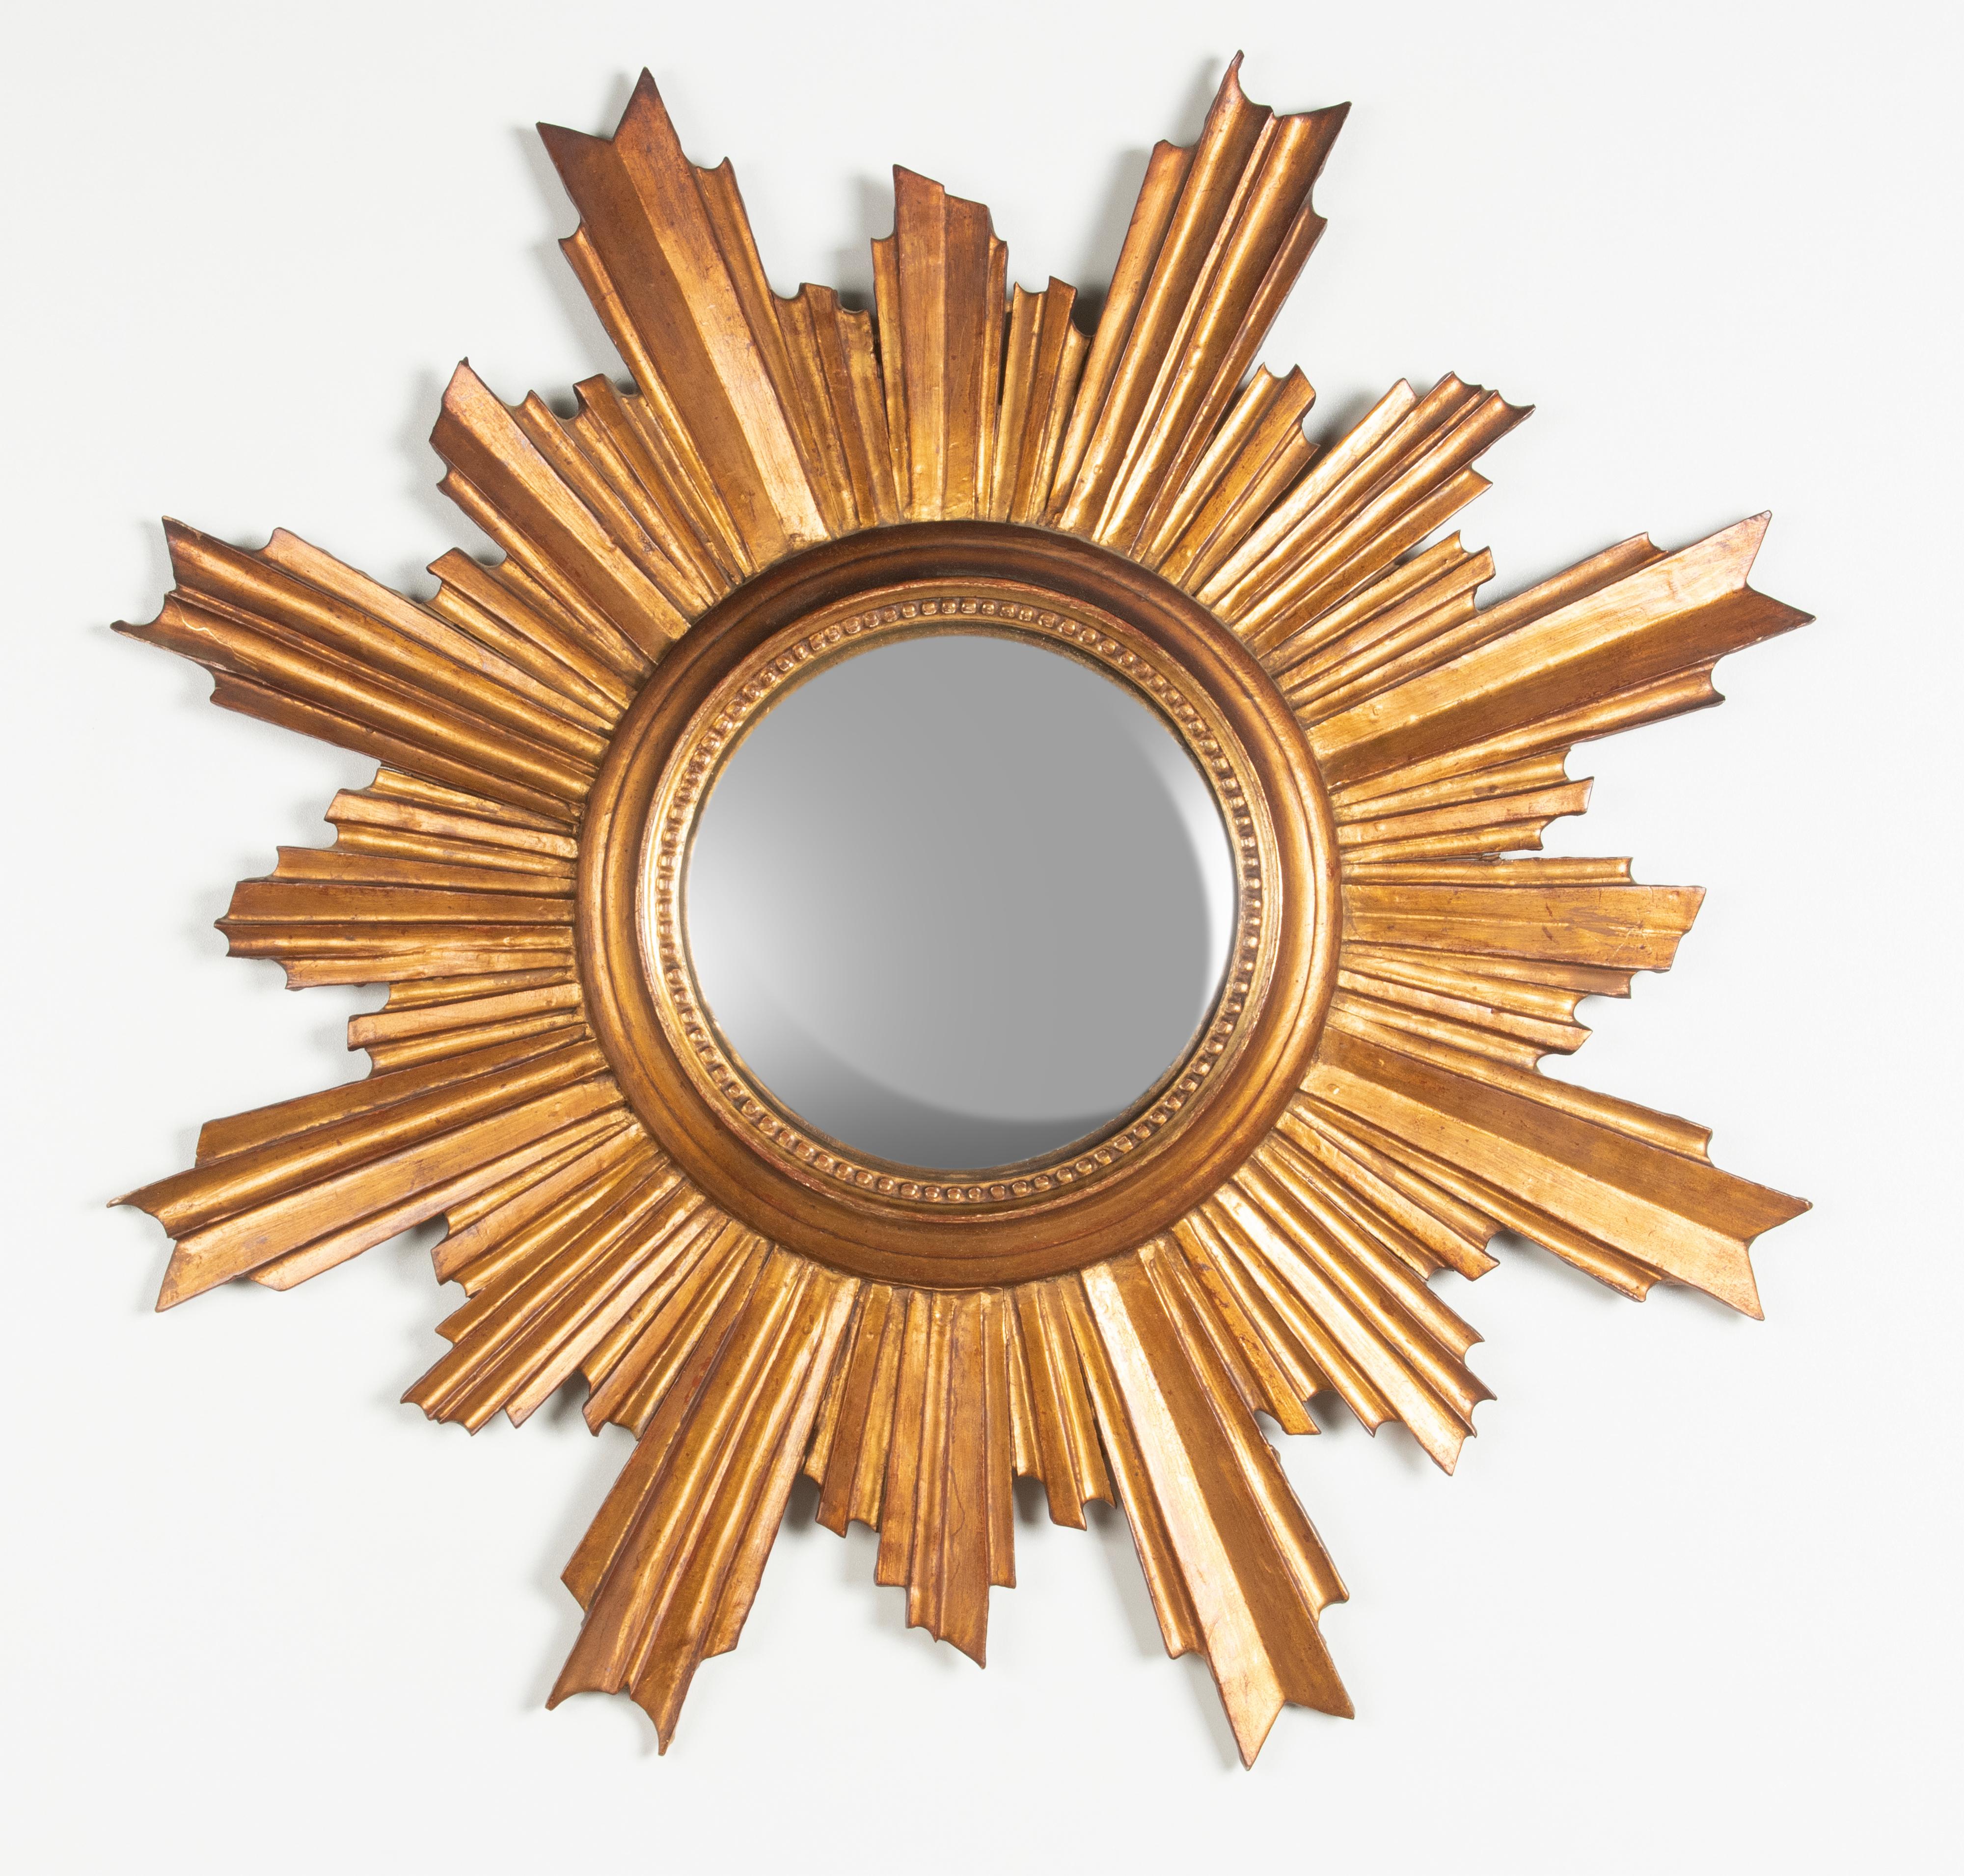 Italian Mid-Century Modern Wooden Carved Convex Sunburst Mirror